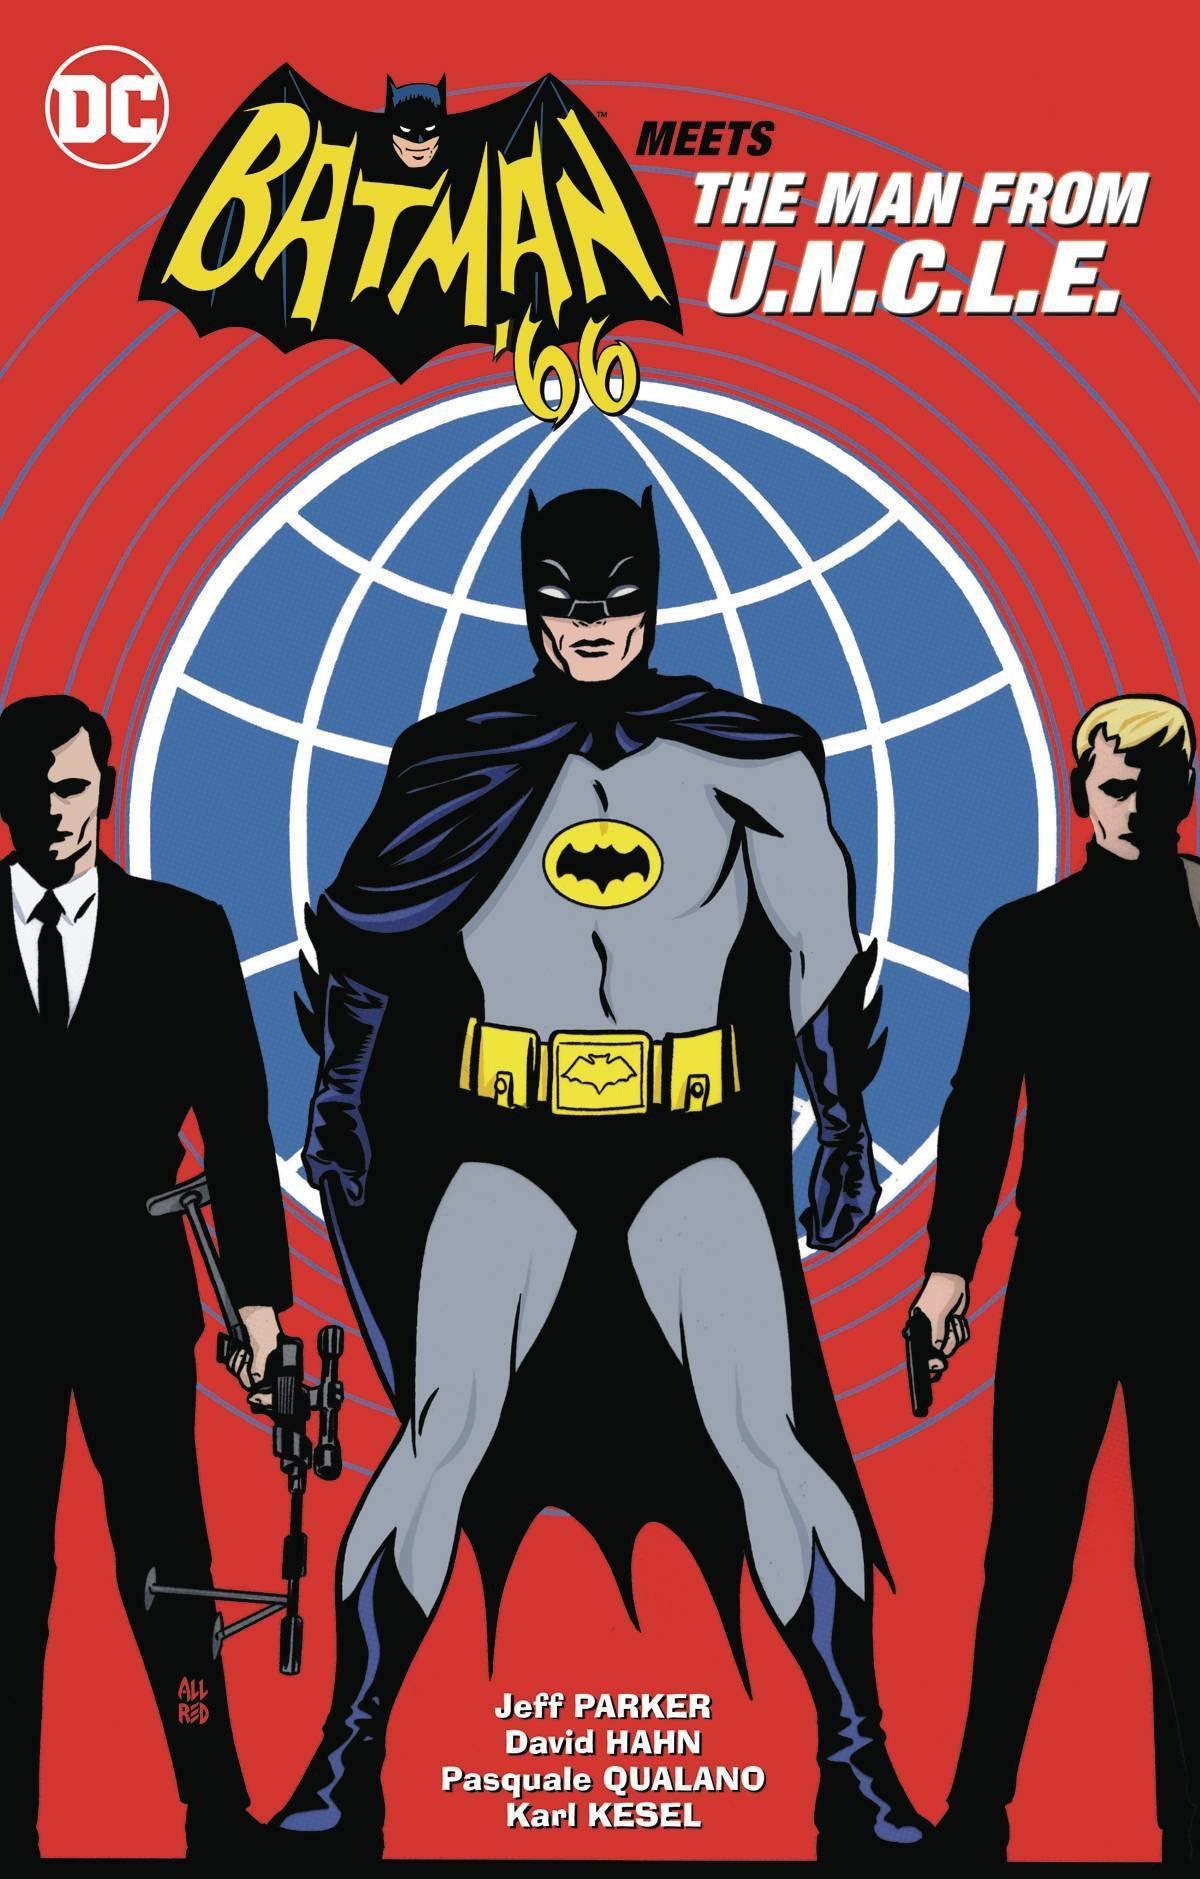 BATMAN 66 MEETS THE MAN FROM UNCLE TP - Kings Comics